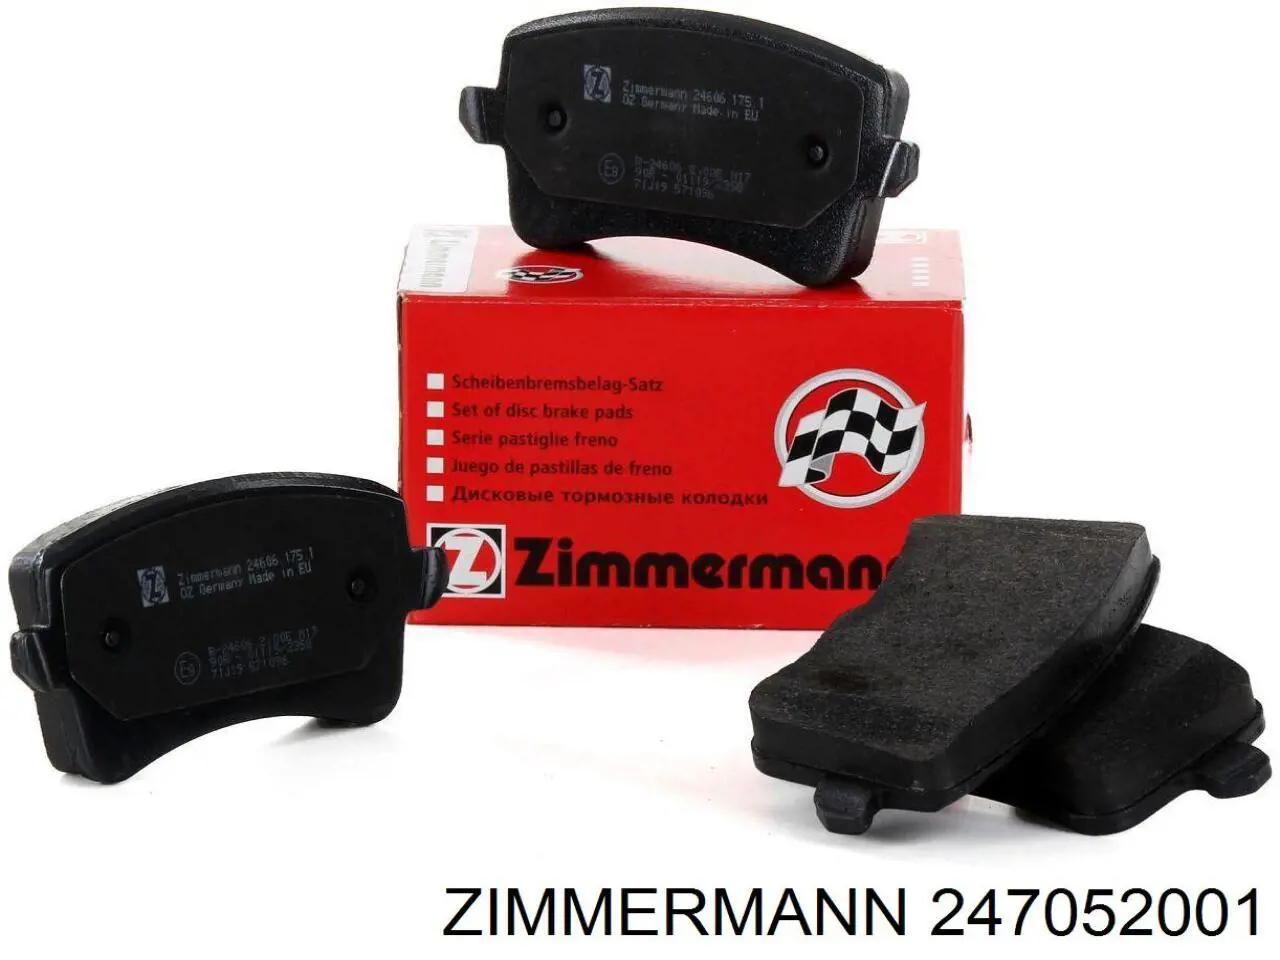 247052001 Zimmermann pastillas de freno delanteras